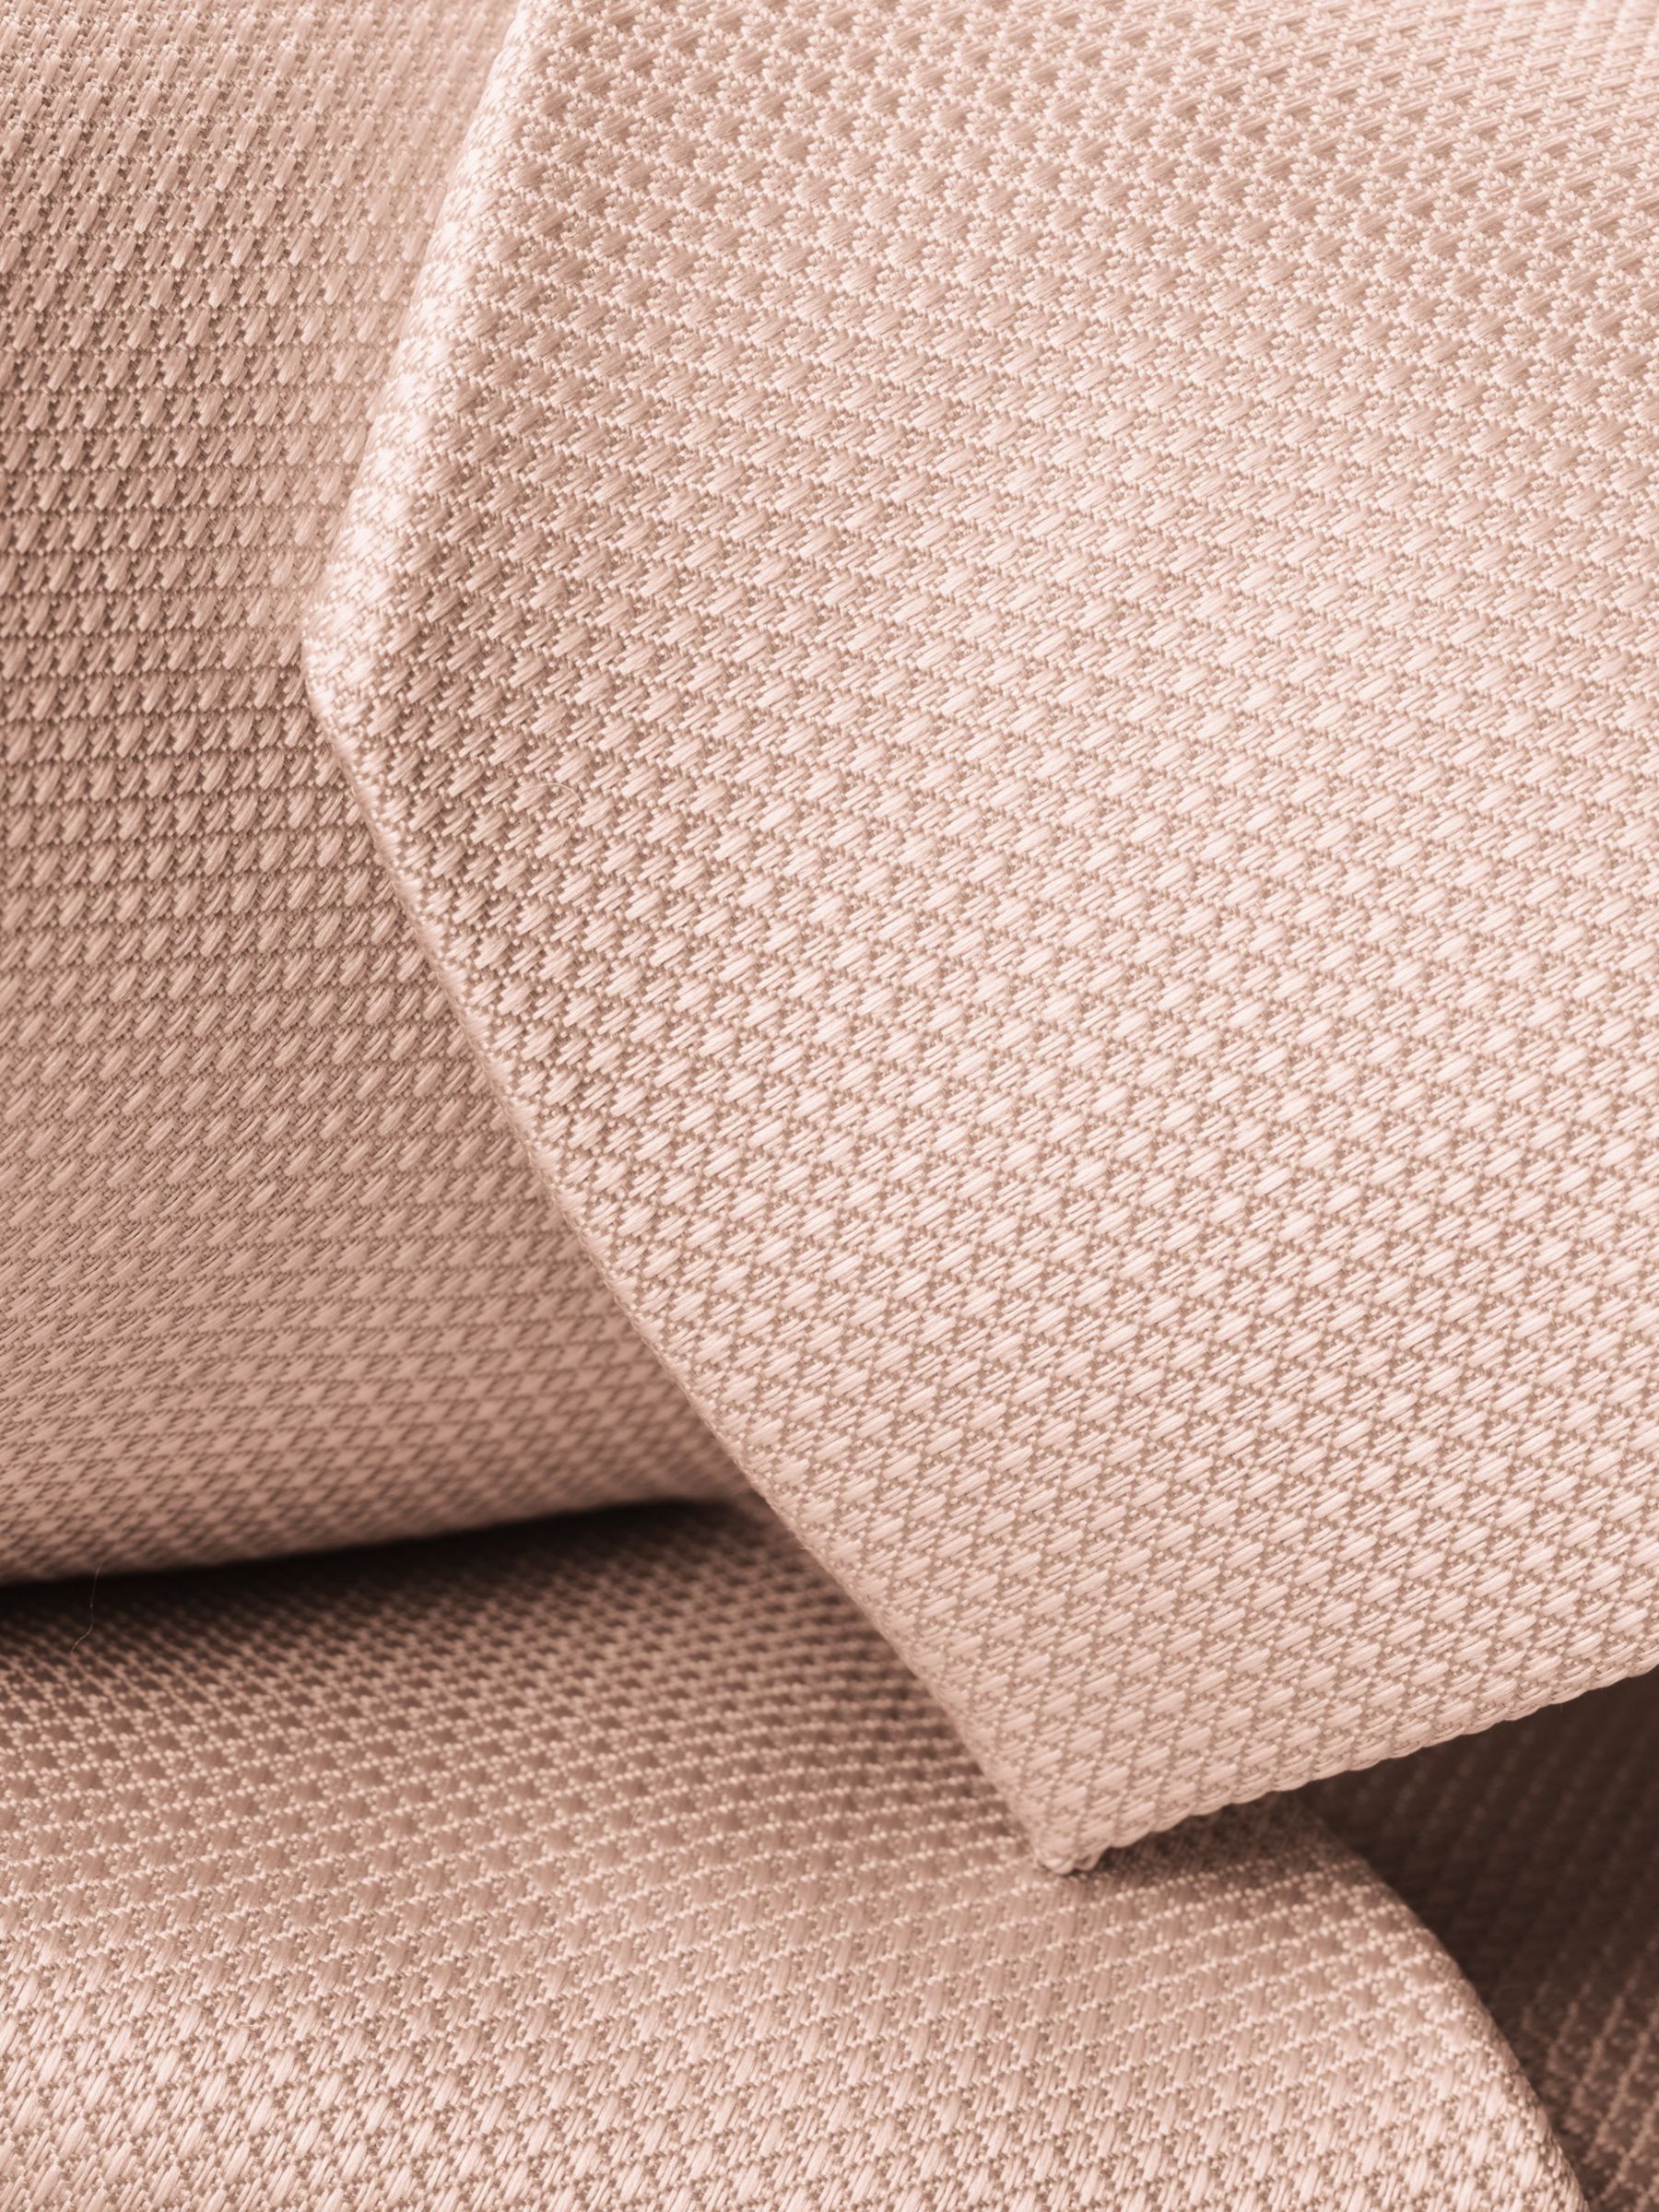 Charles Tyrwhitt Textured Silk Stain Resistant Tie, Light Pink, One Size